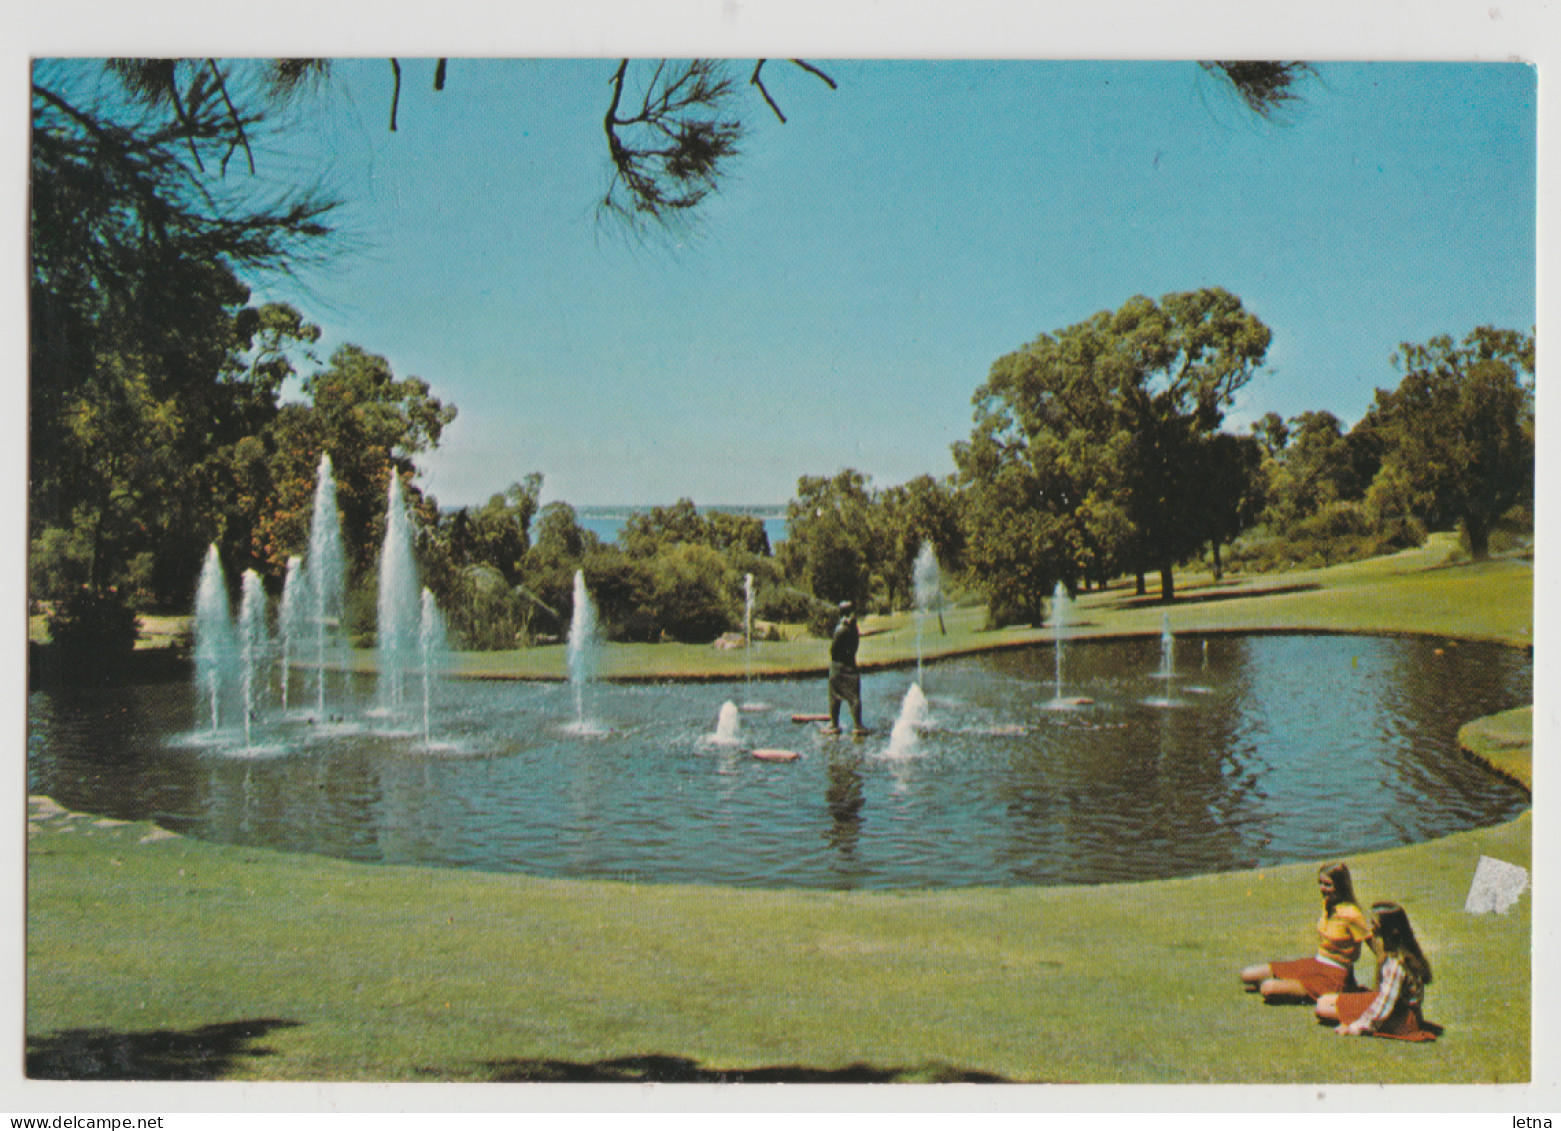 WESTERN AUSTRALIA WA Pioneer Womens Fountain Kings Park PERTH Murfett P7020-5 Postcard C1970s - Perth